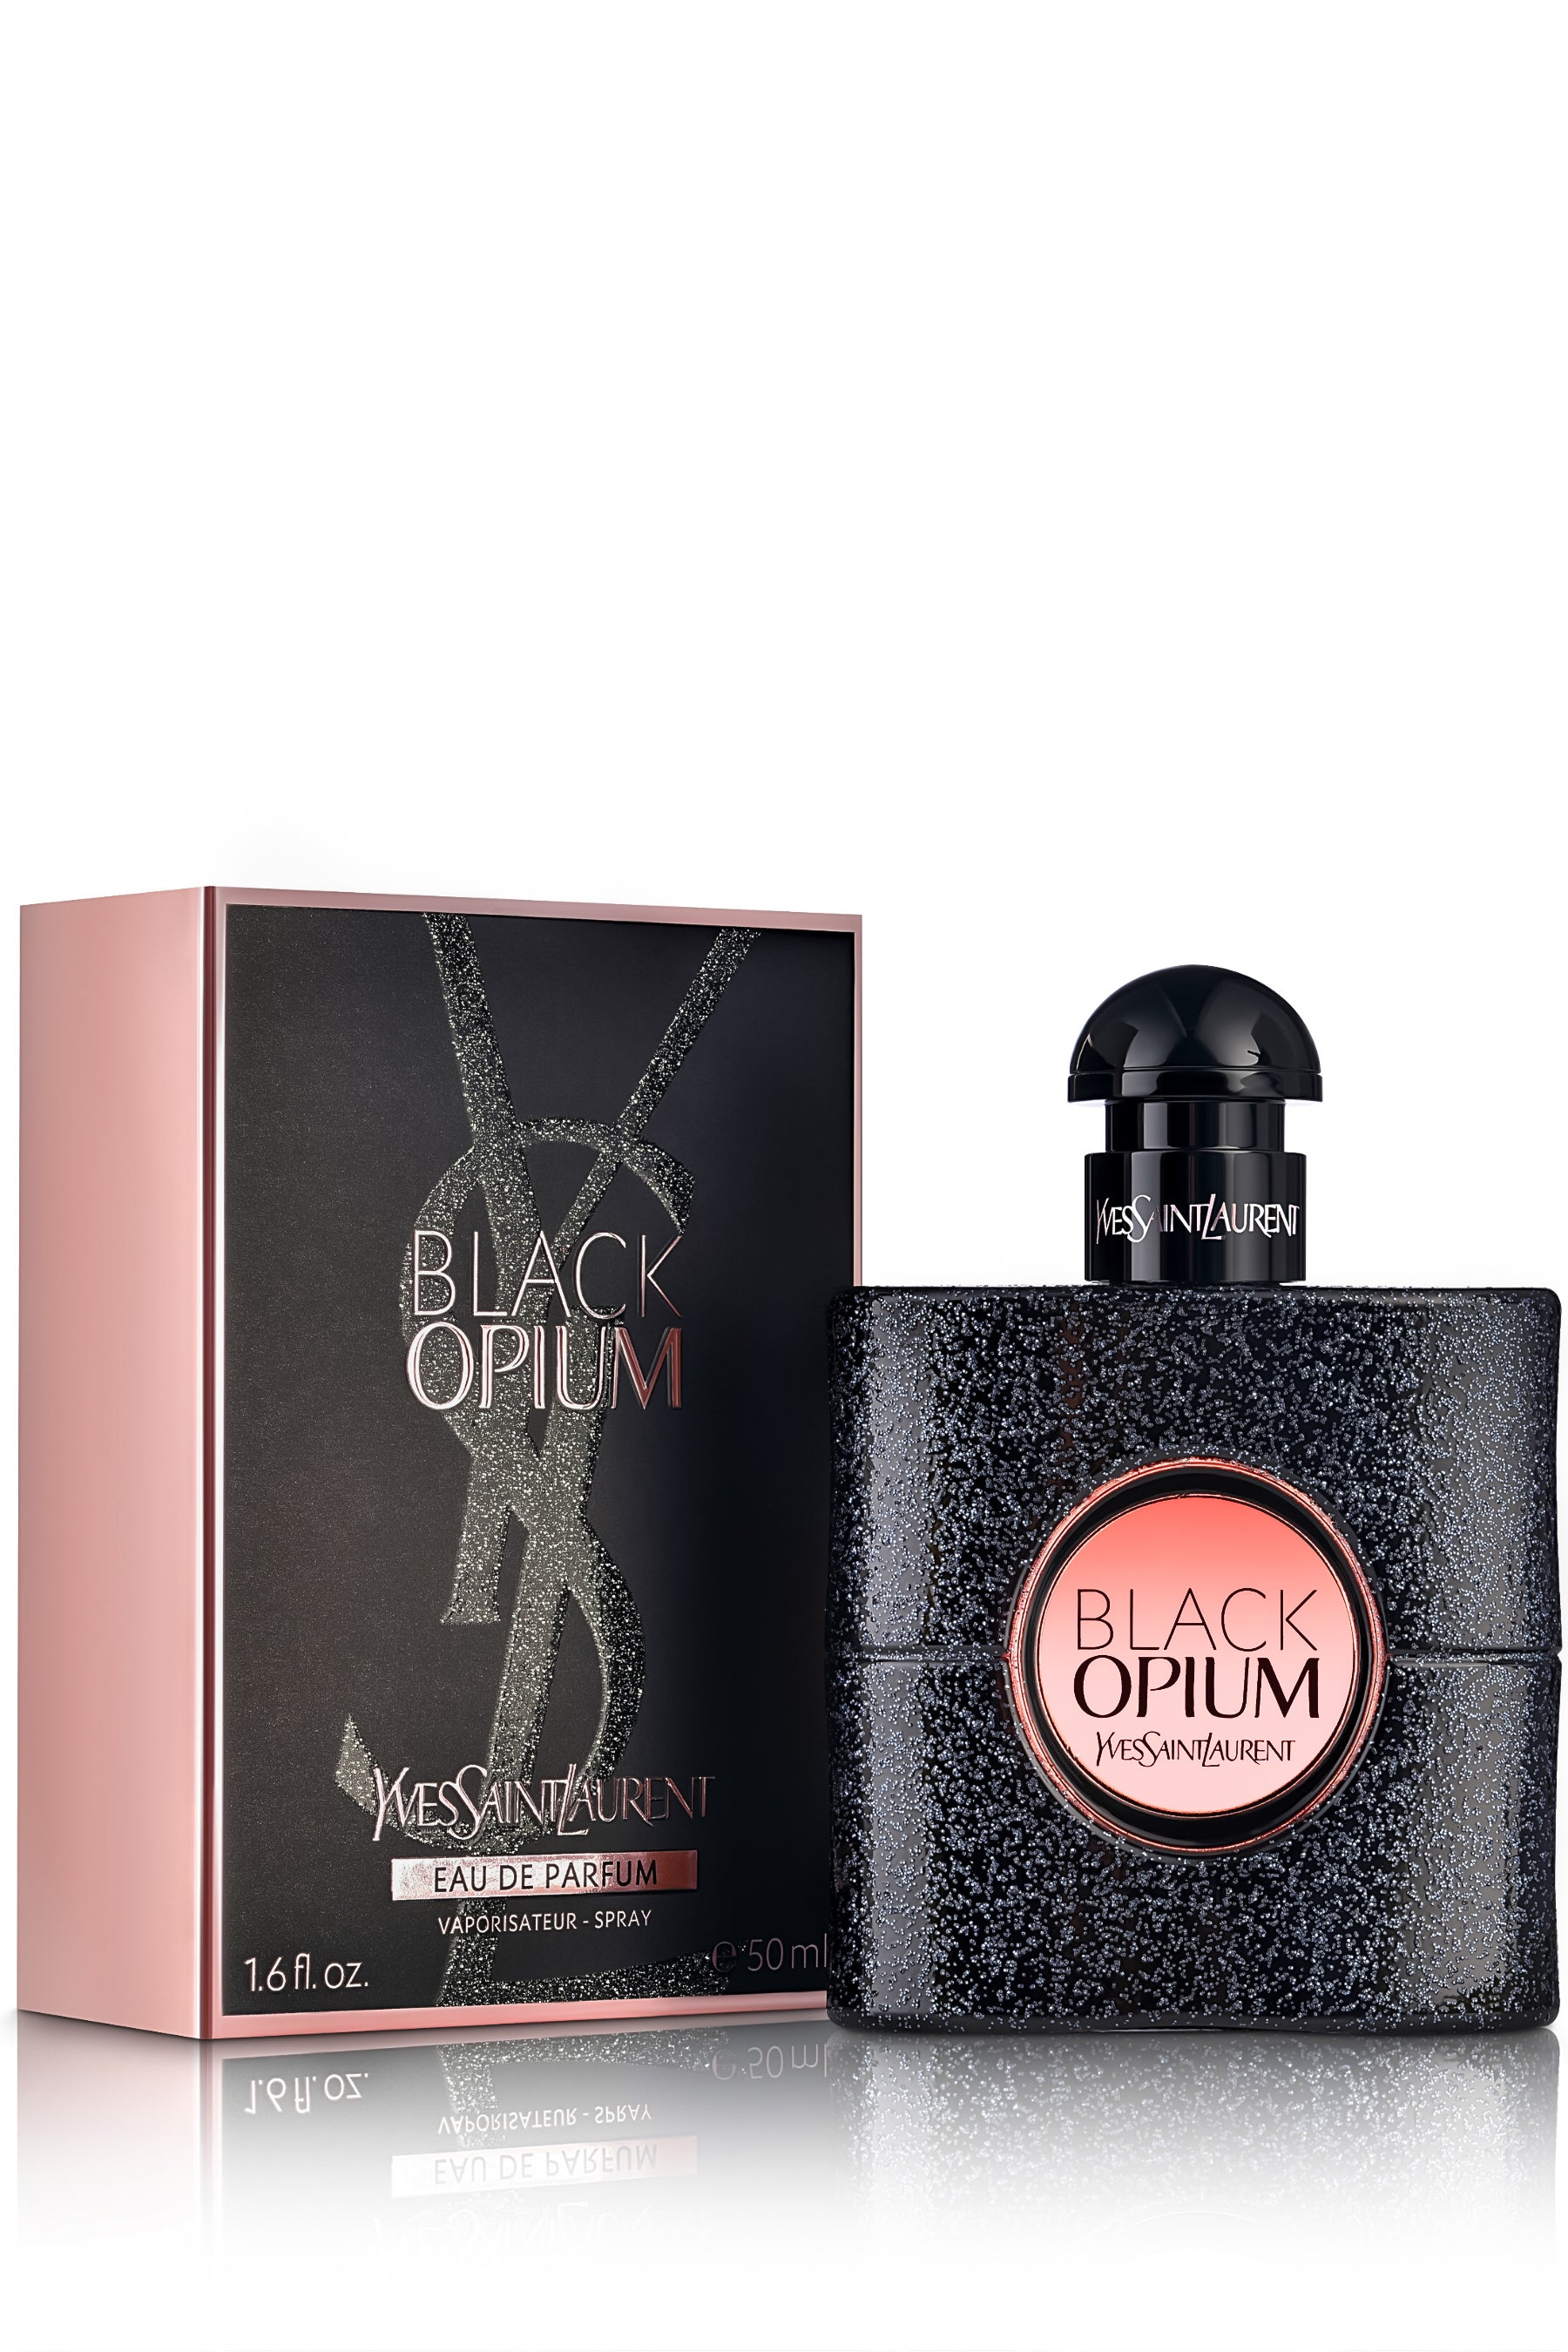 Yves Saint Laurent, Black Opium Perfume